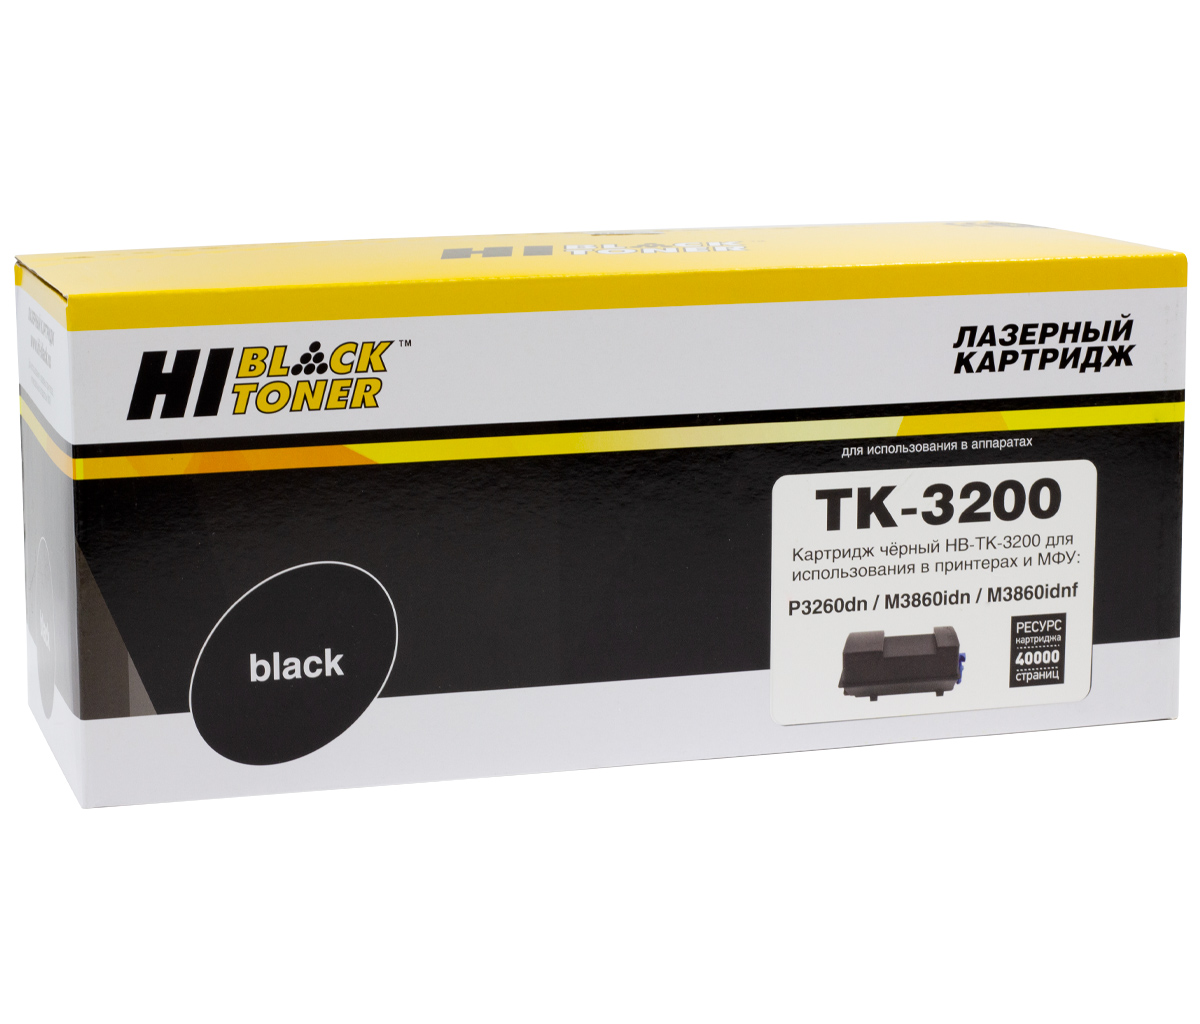 Тонер-картридж Hi-Black (HB-TK-3200) для Kyocera ECOSYS P3260dn/ M3860idn/ M3860idnf, чёрный (40000 стр.)